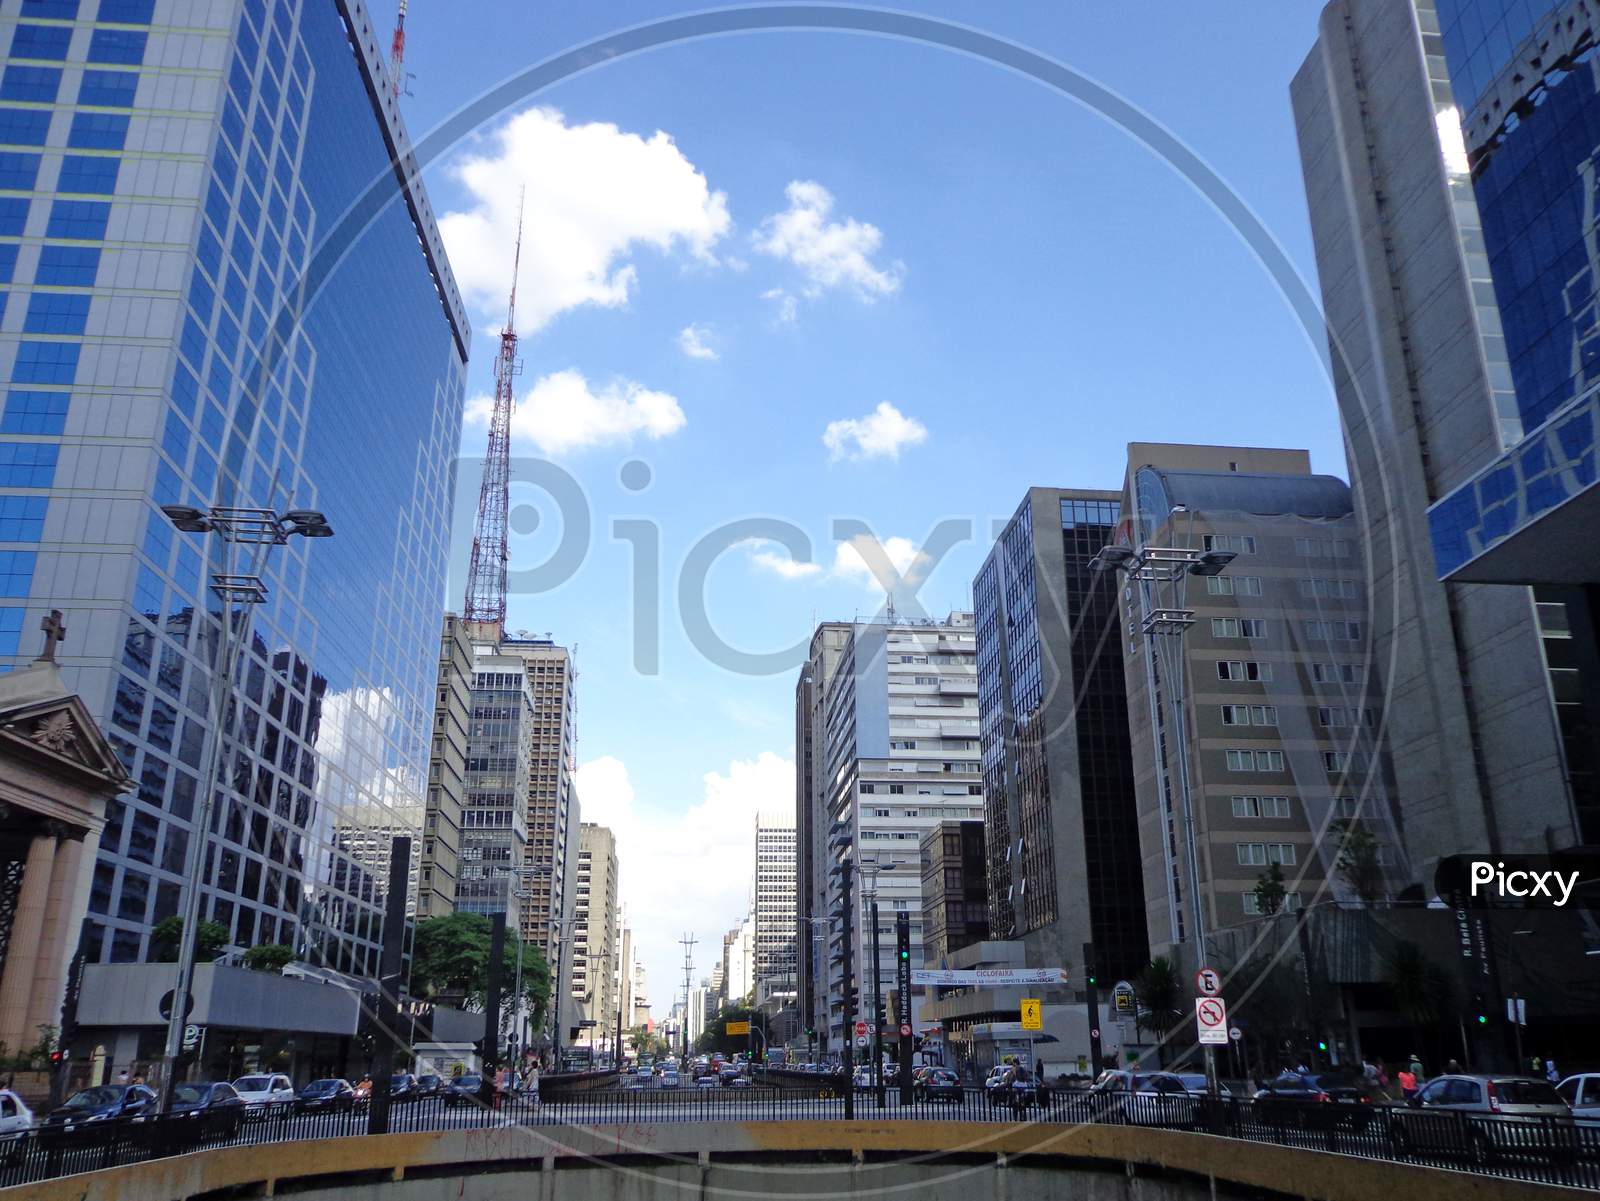 SAO PAULO CITY, SAO PAULO, BRAZIL: Avenida Paulista